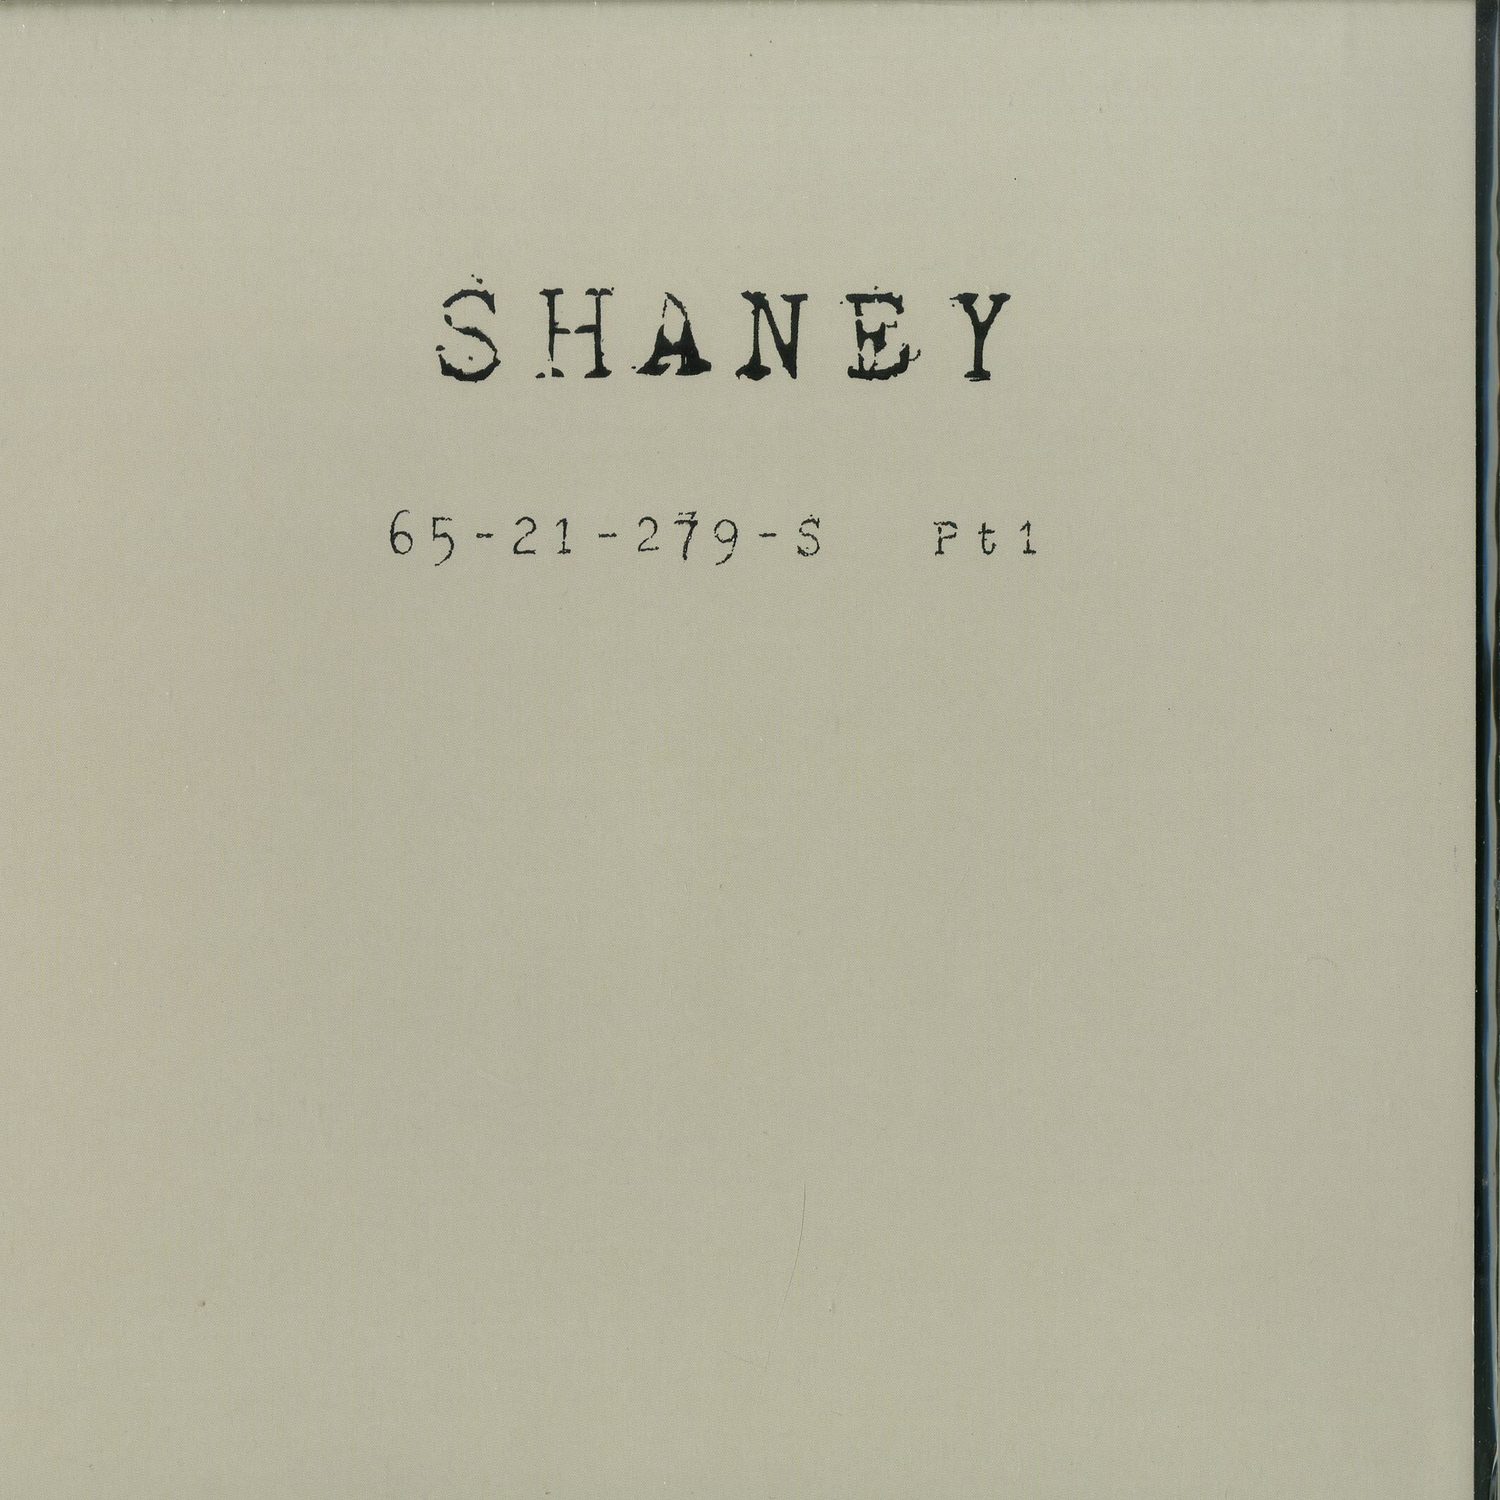 Shaney - 65-21-279-S PT.1